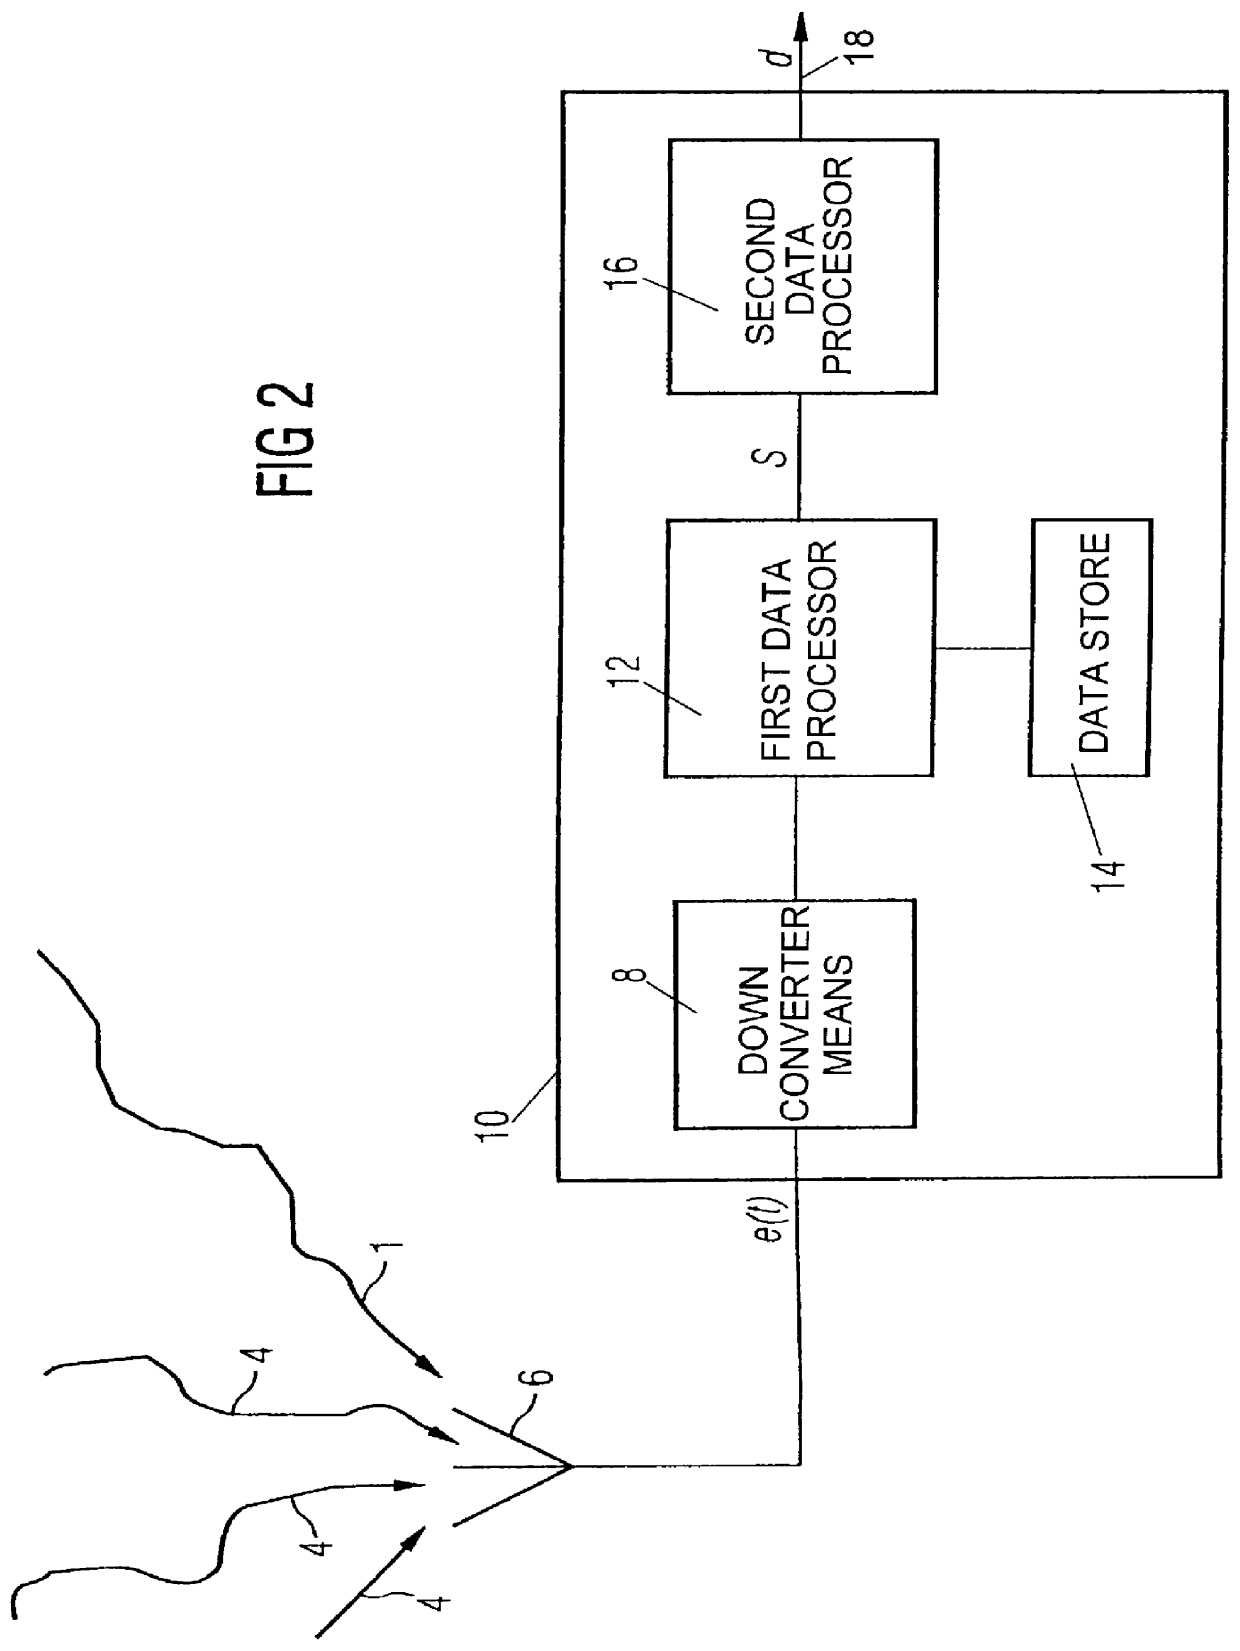 Radio communications receiver and method of receiving radio signals